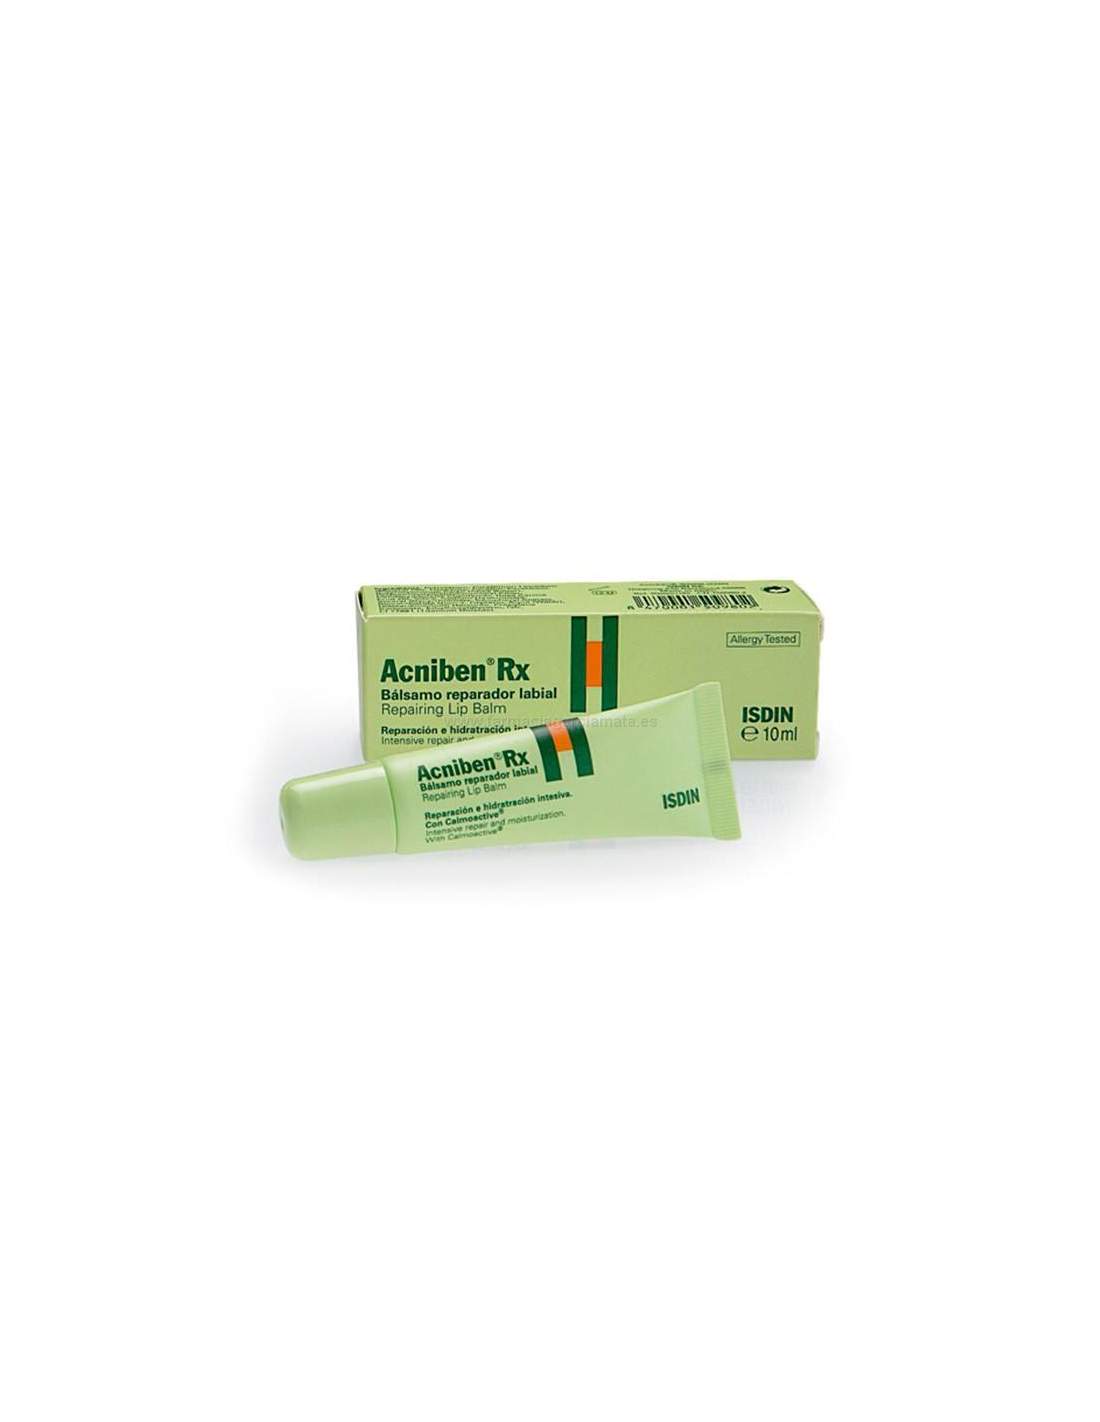 ACNIBEN RX BALSAMO REPARADOR LABIAL 10 ML - Farmacia Tinoco